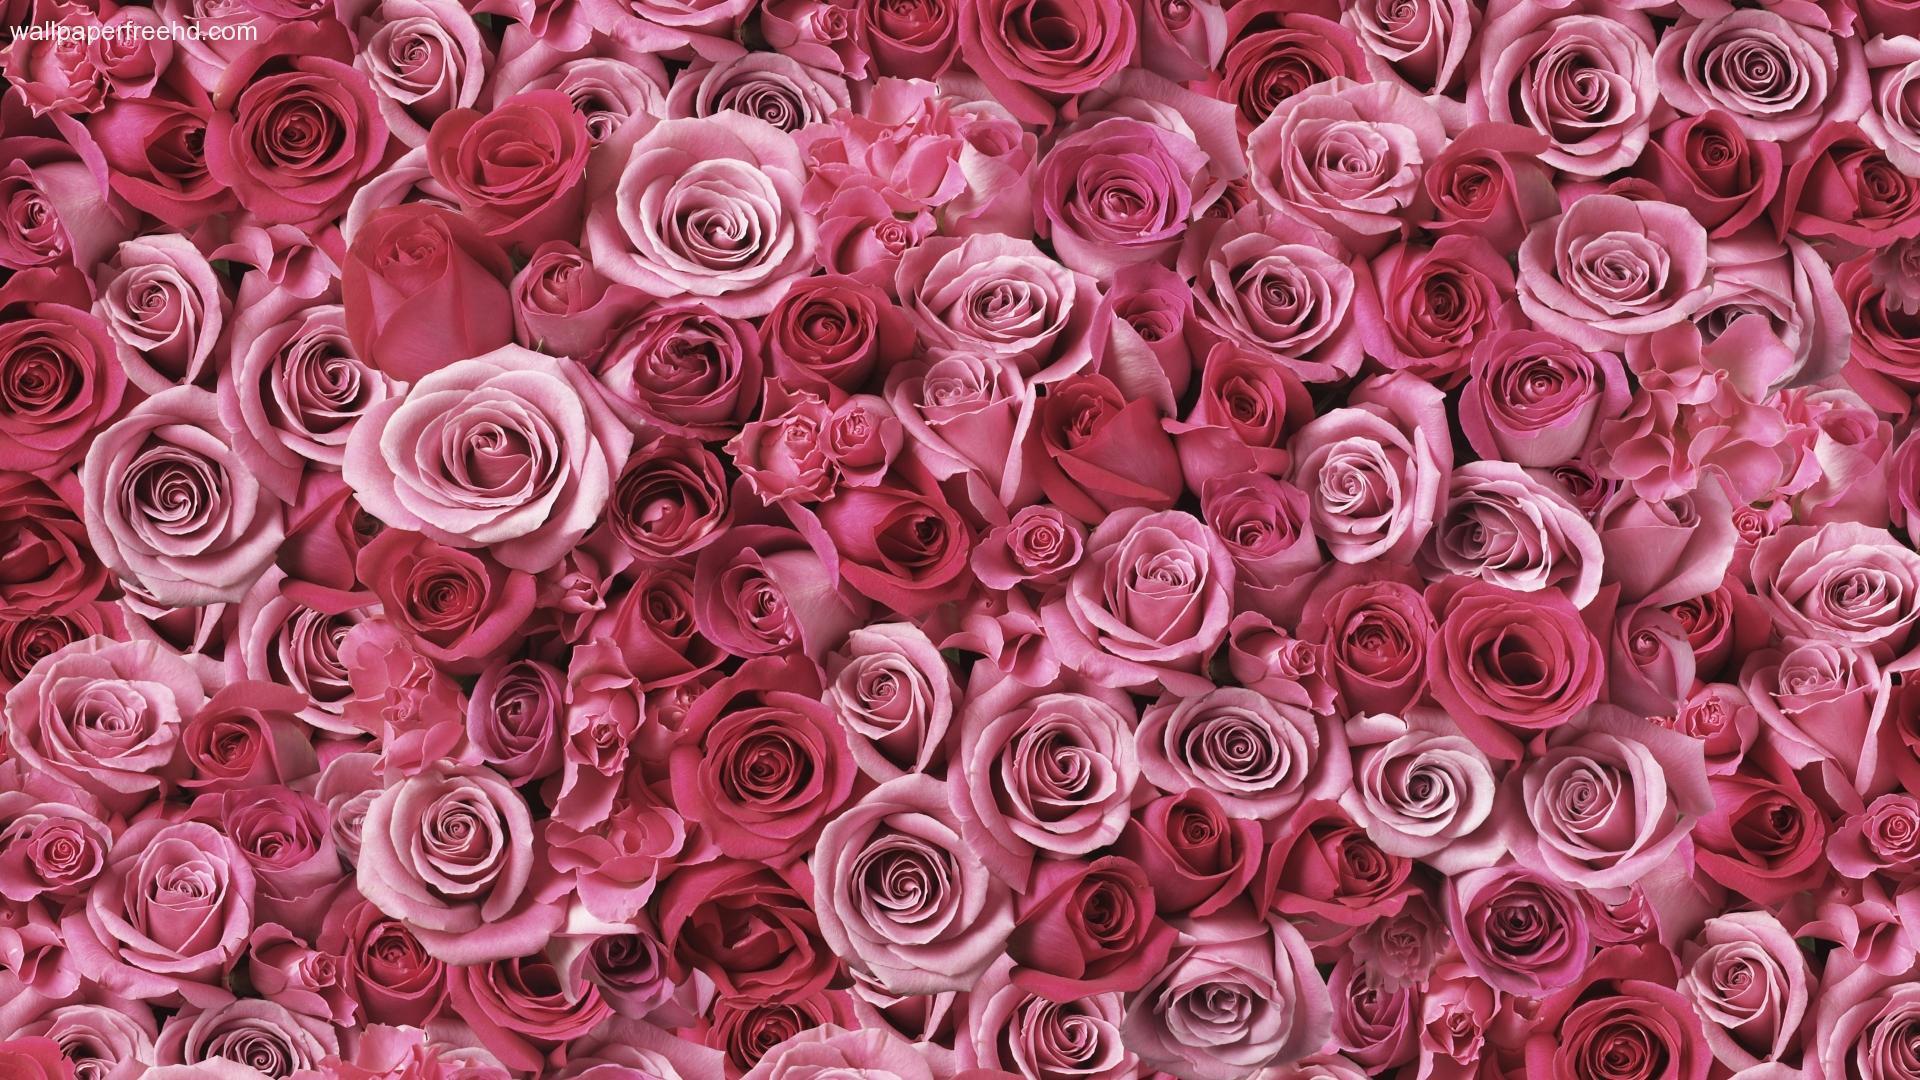 Cute Rose AestheticWallpapers